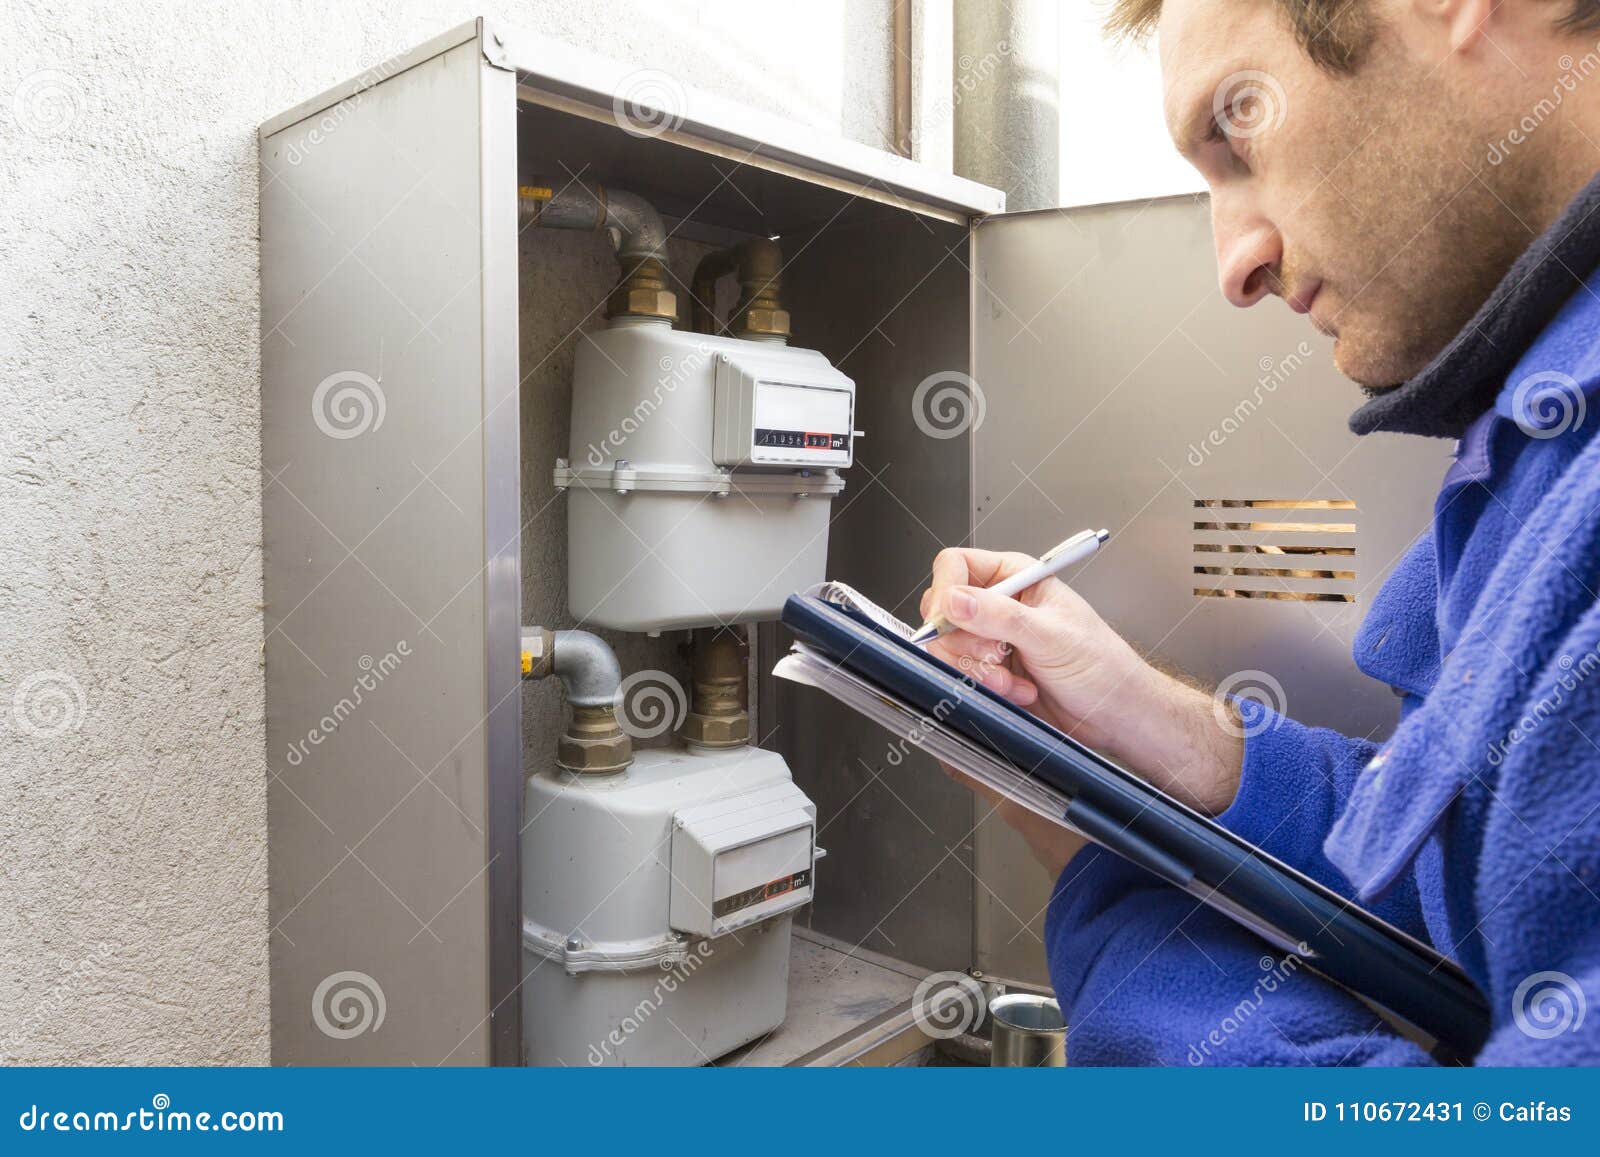 plumber at work making the consumption metering